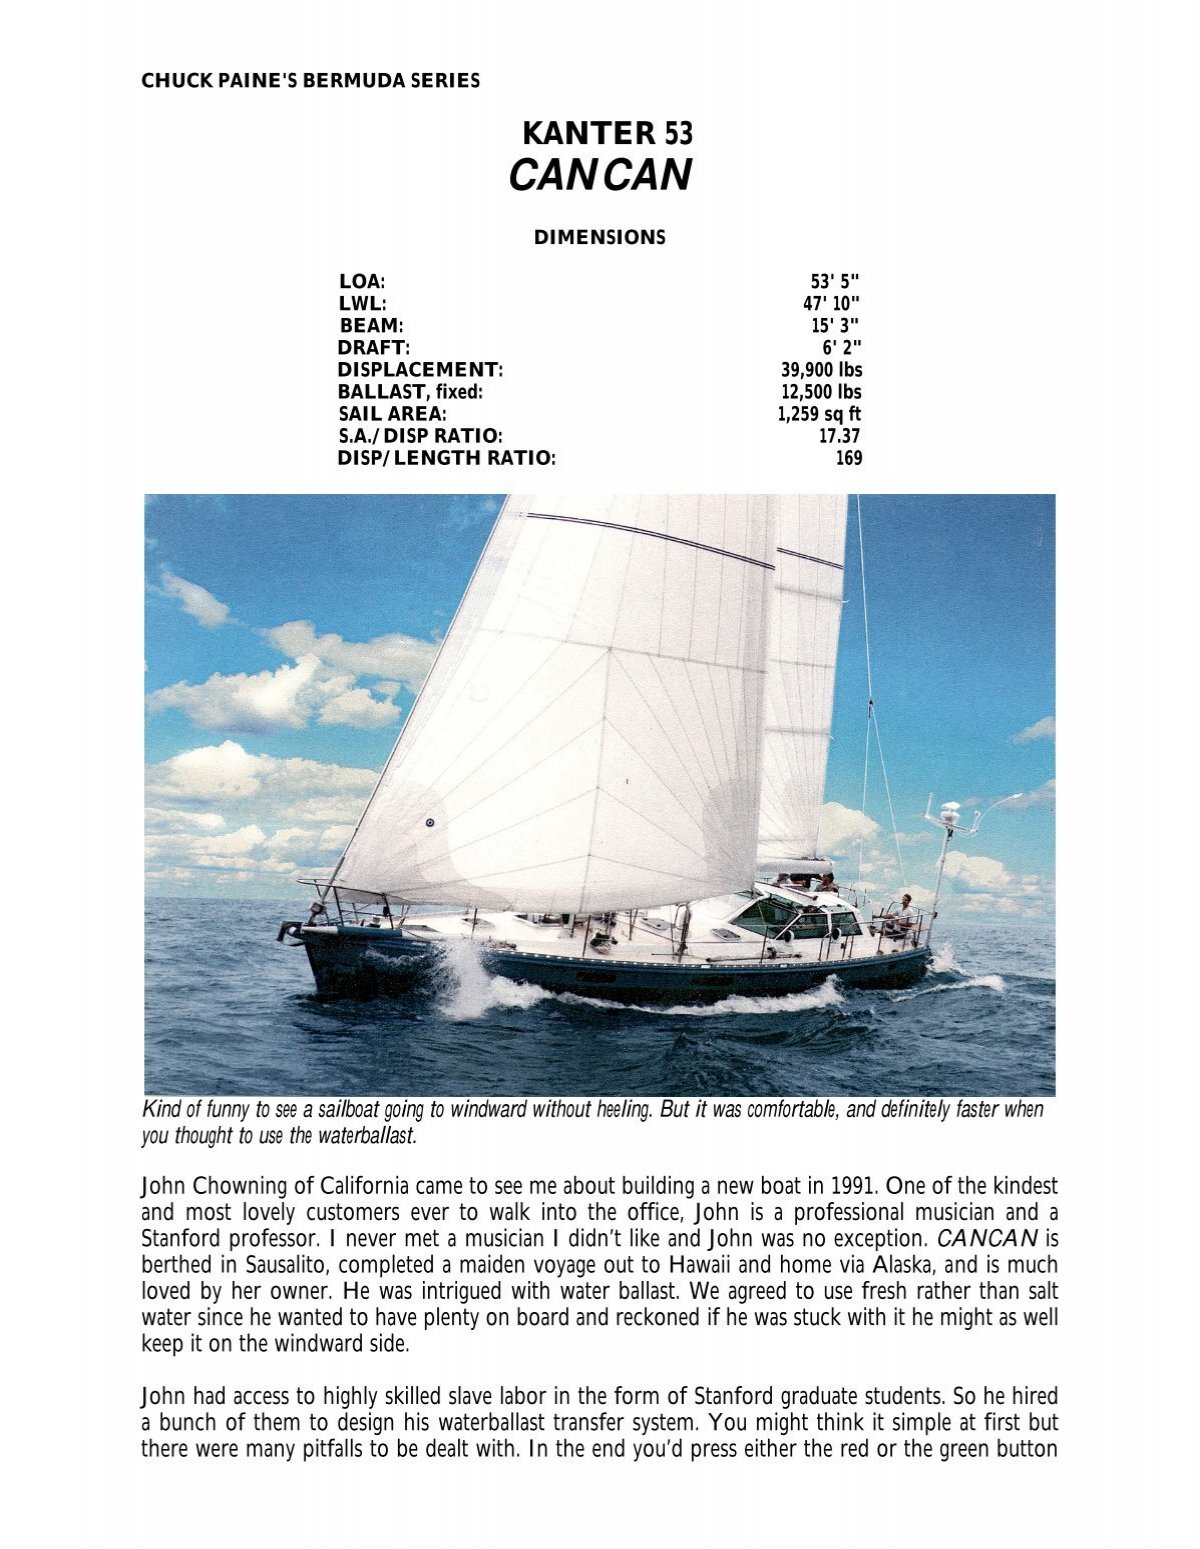 kanter 53 sailboat